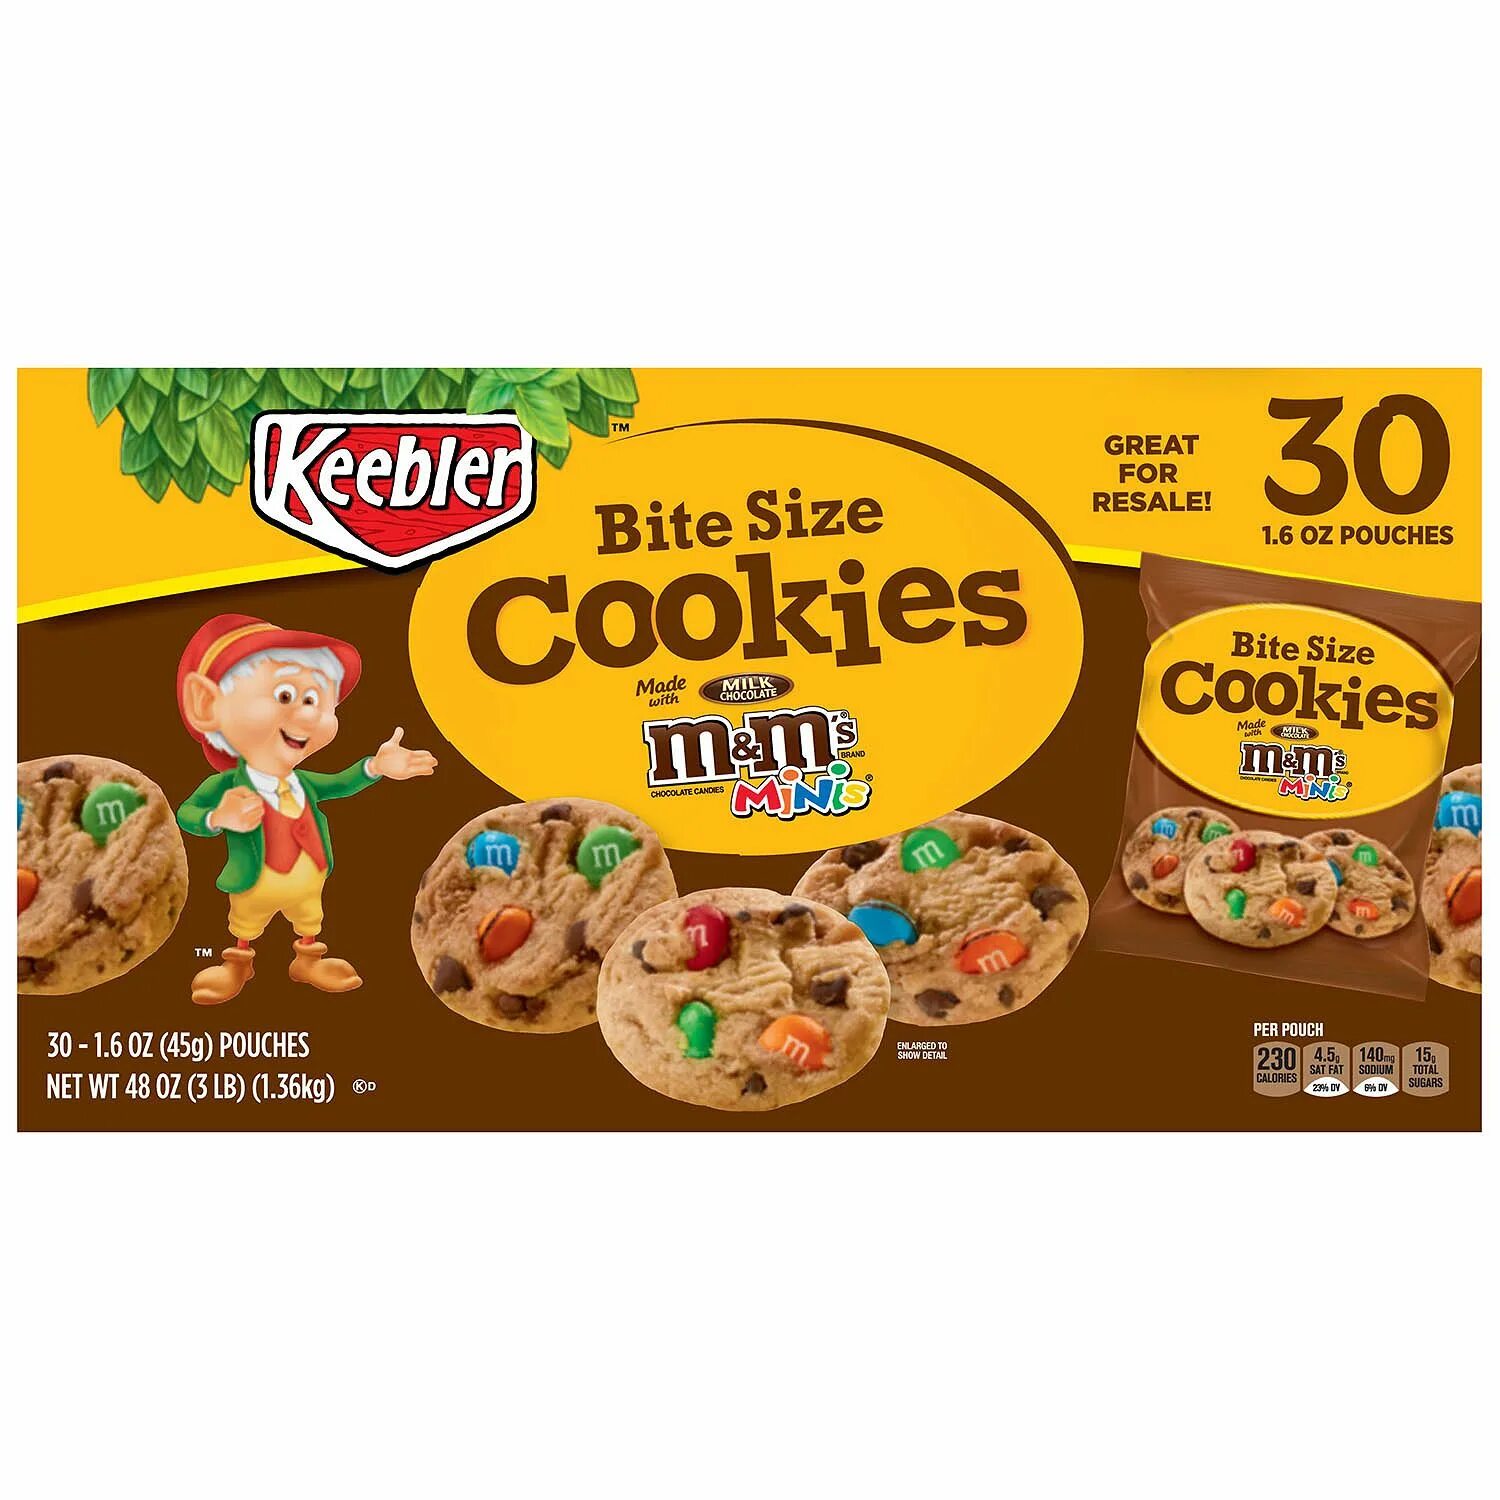 Эмемдемс bite Size cookies. Keebler бренд. Печенья m m's логотип. Bite печенье. Размер cookie